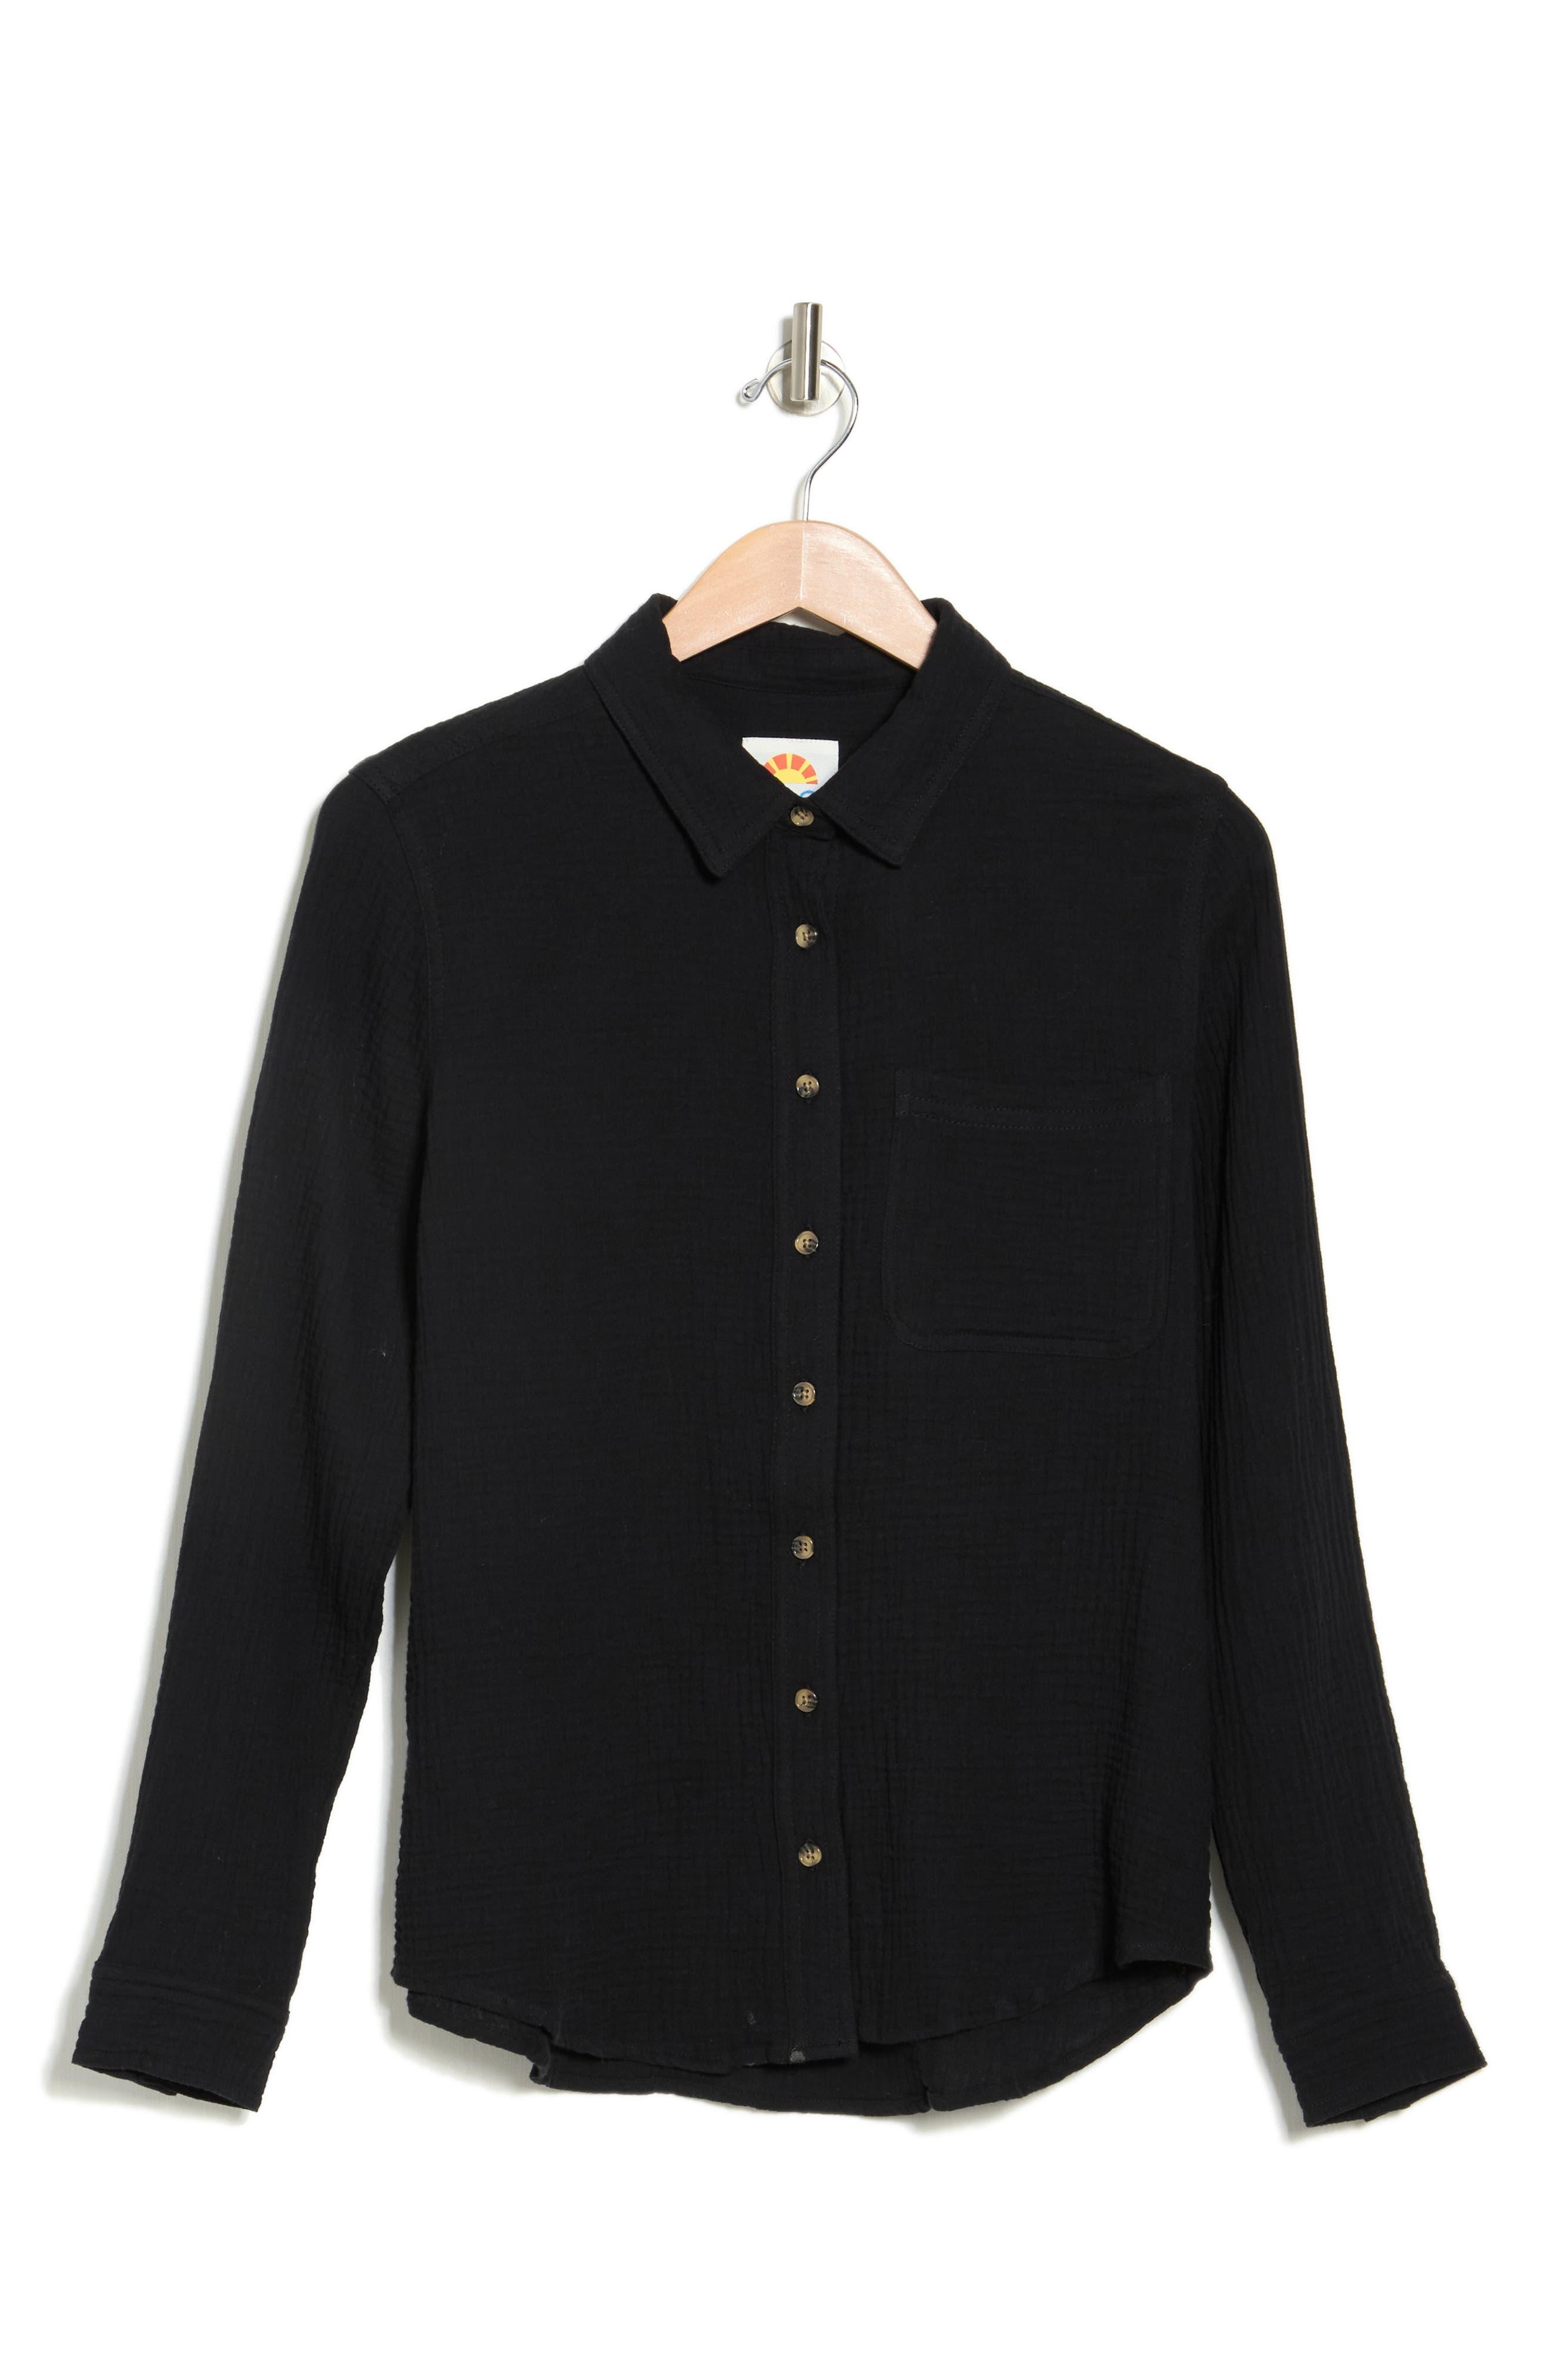 C&C California Collared Long Sleeve Gauze Shirt in Black | Lyst